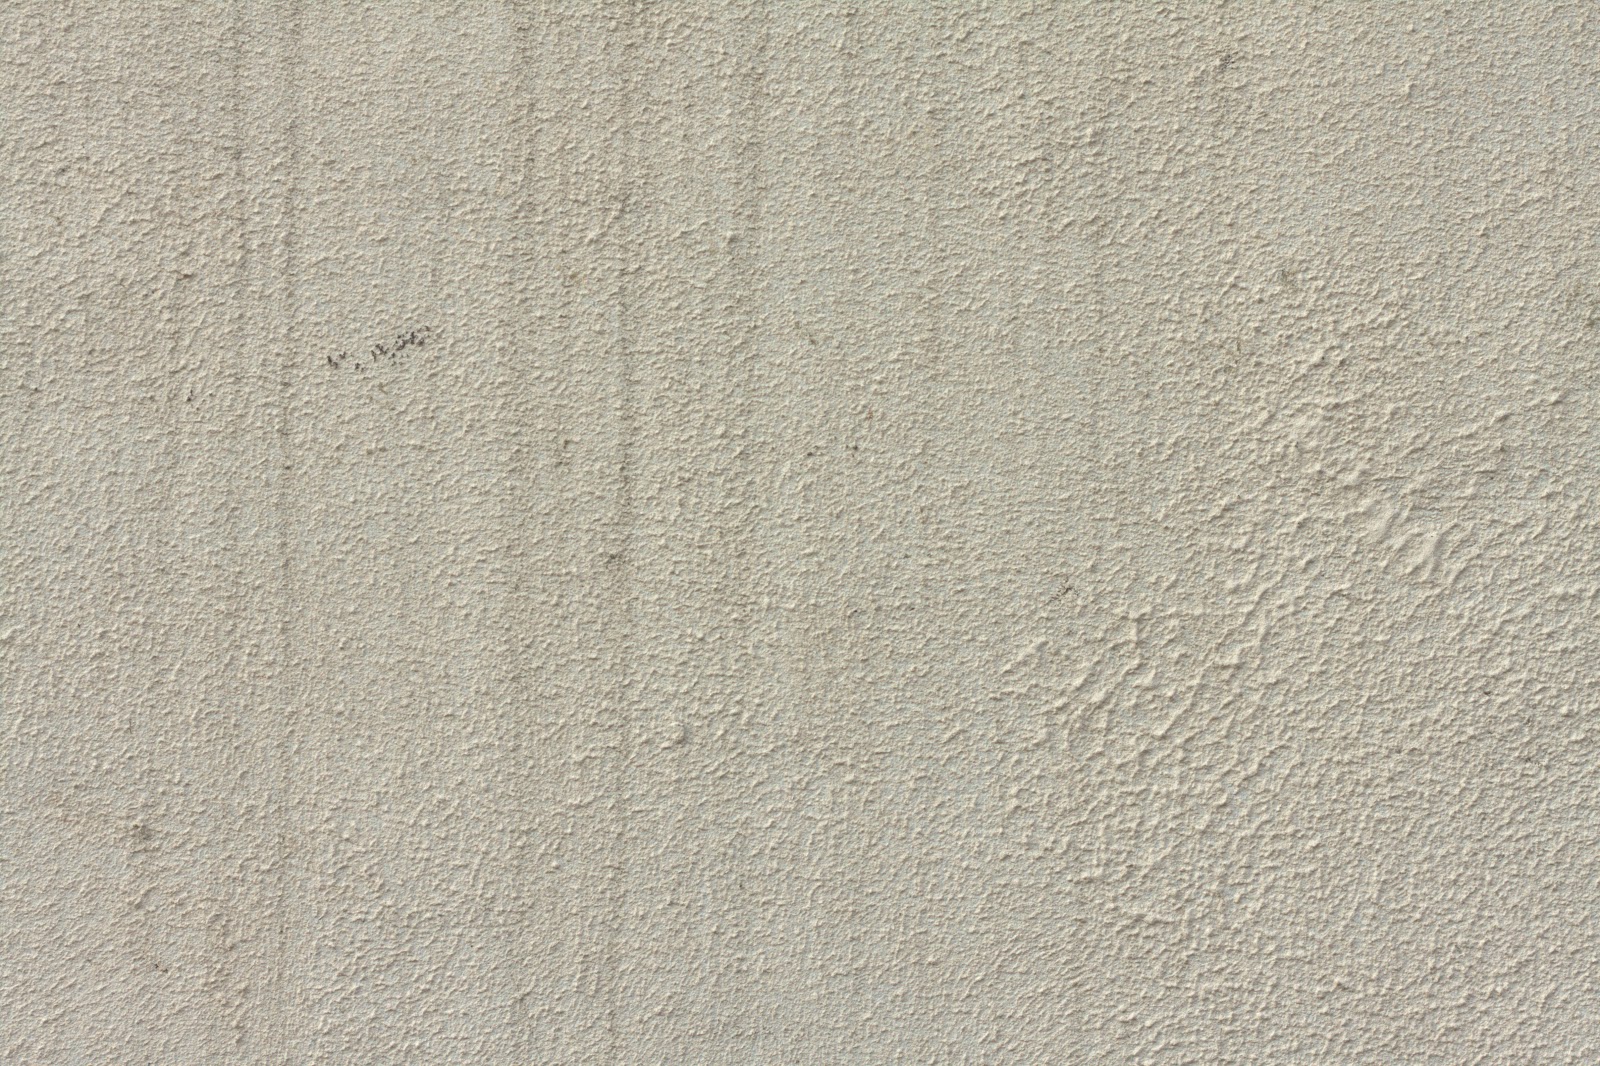 Stucco wall dirt lines feb_2015_2 texture 4770x3178